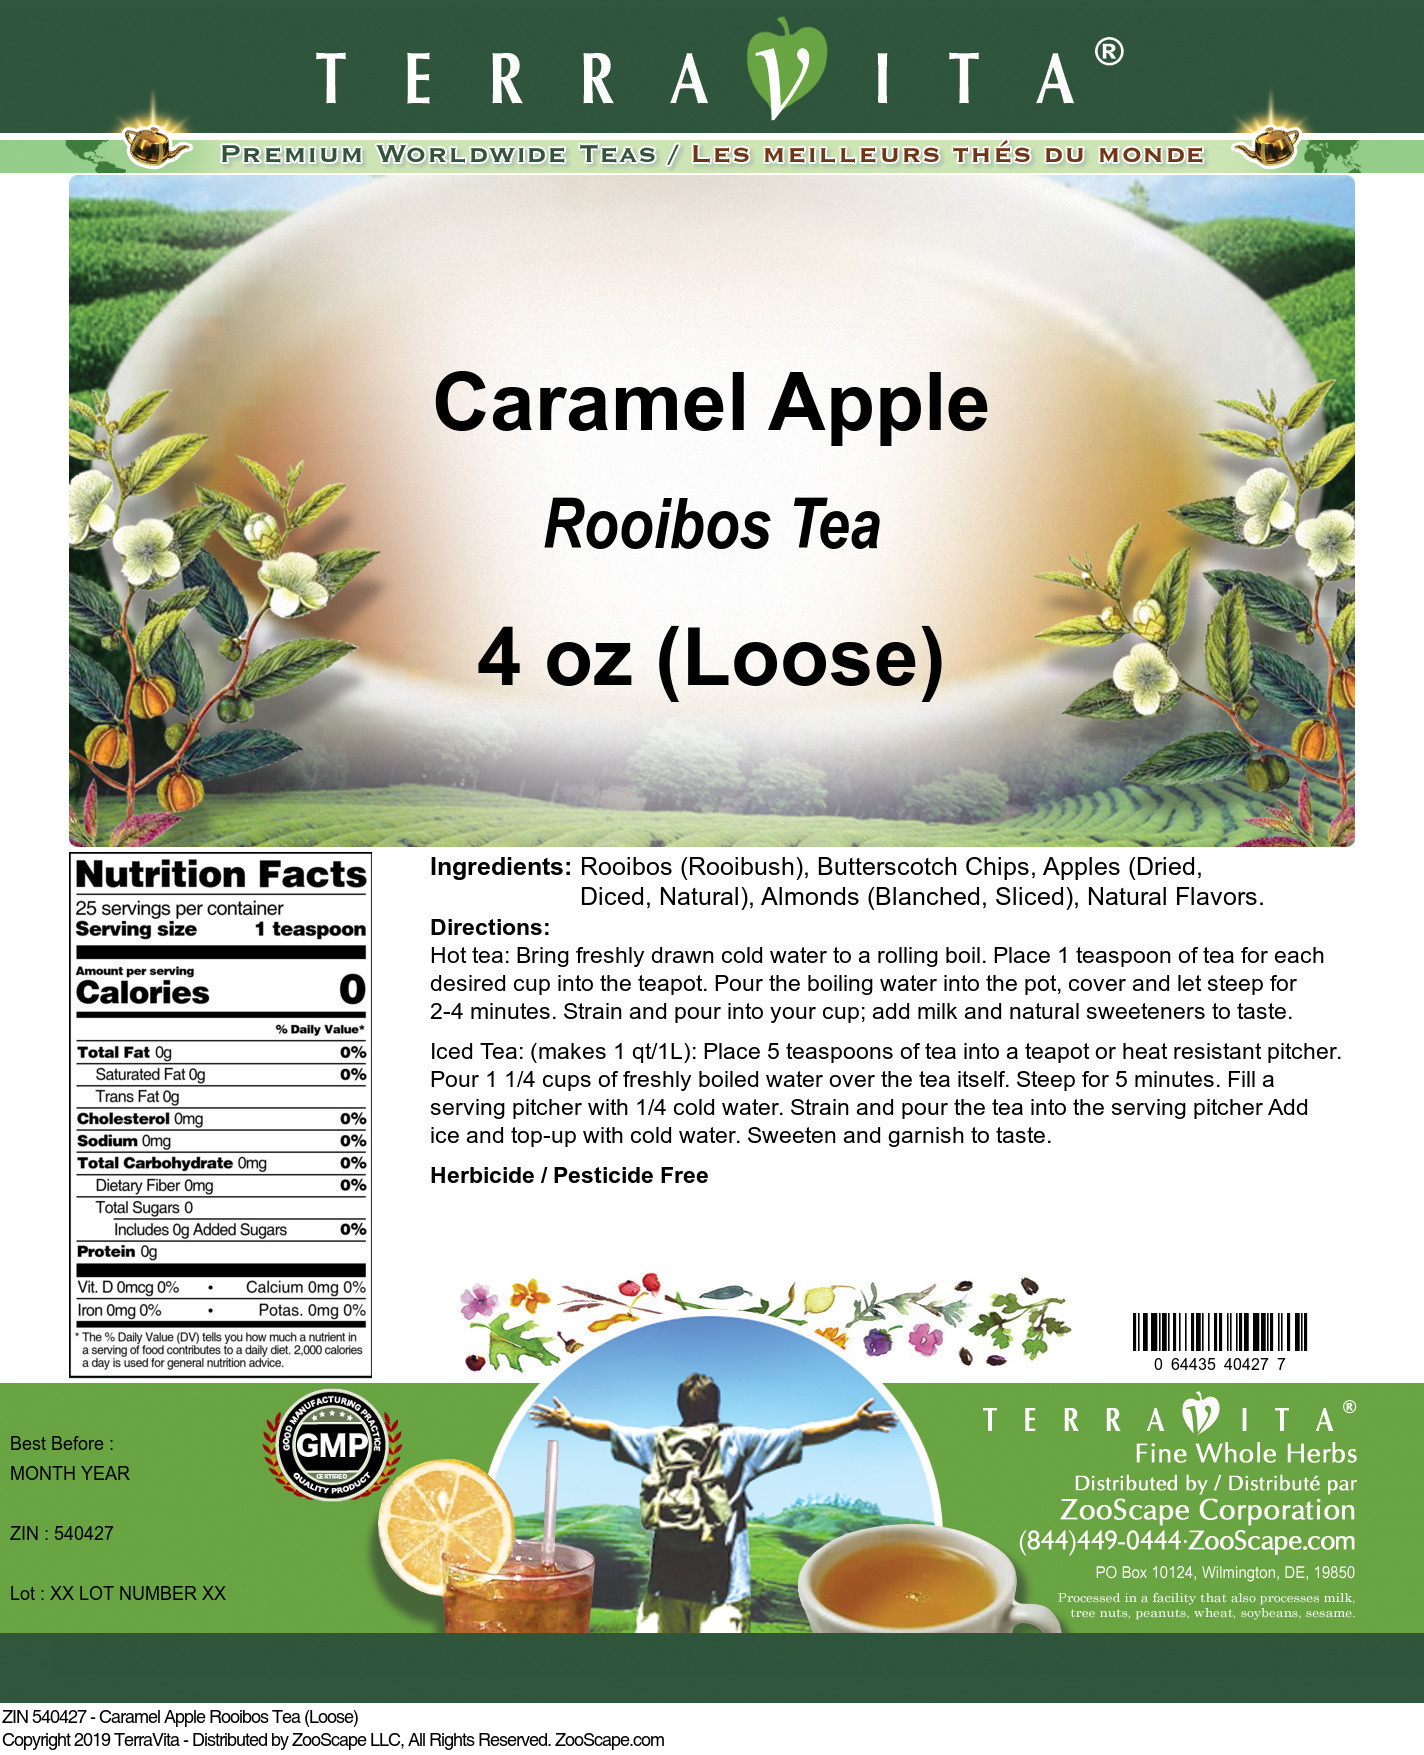 Caramel Apple Rooibos Tea (Loose) - Label